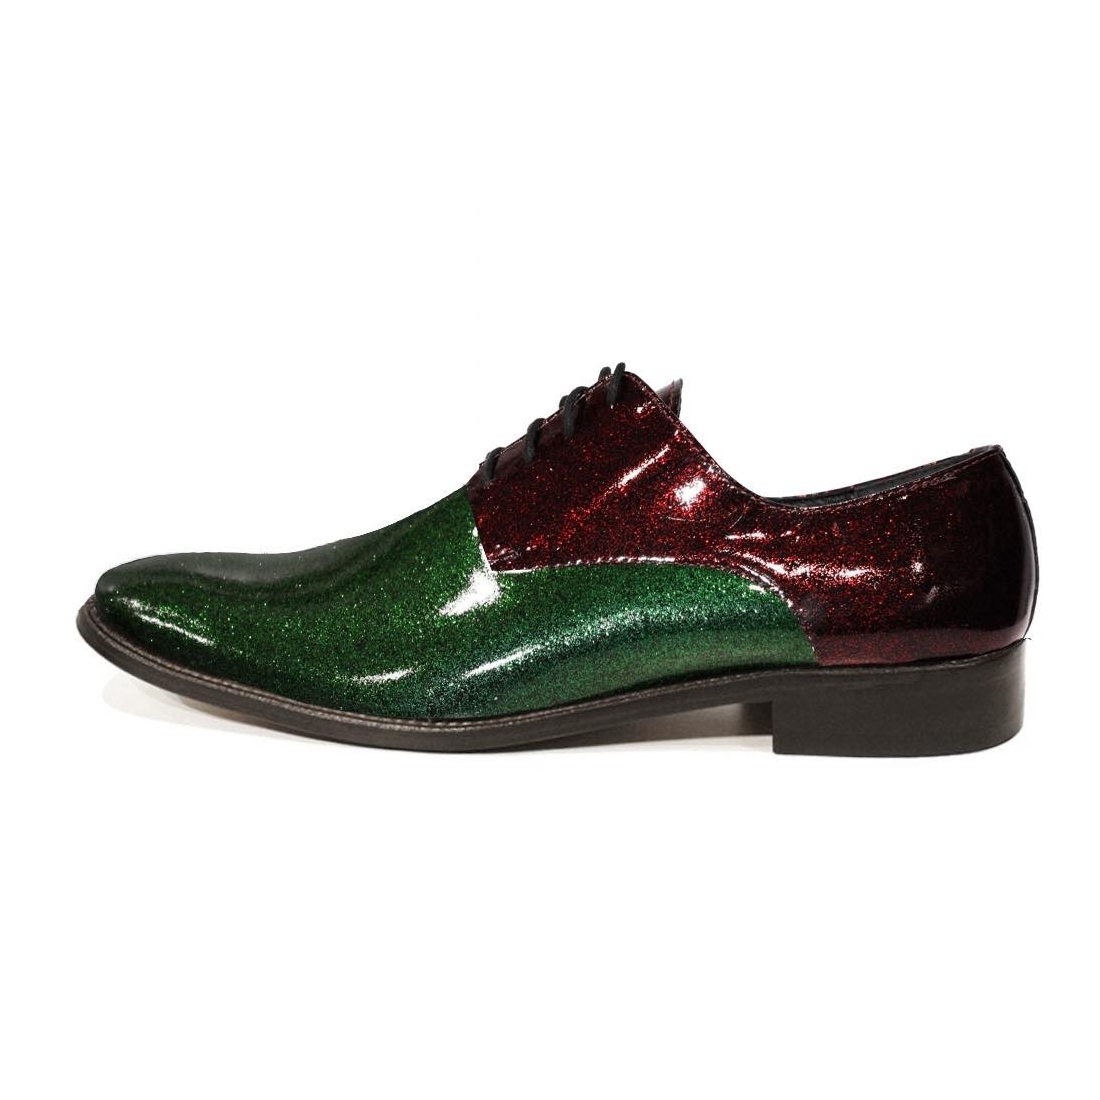 Modello Luccichio - Chaussure Classique - Handmade Colorful Italian Leather Shoes